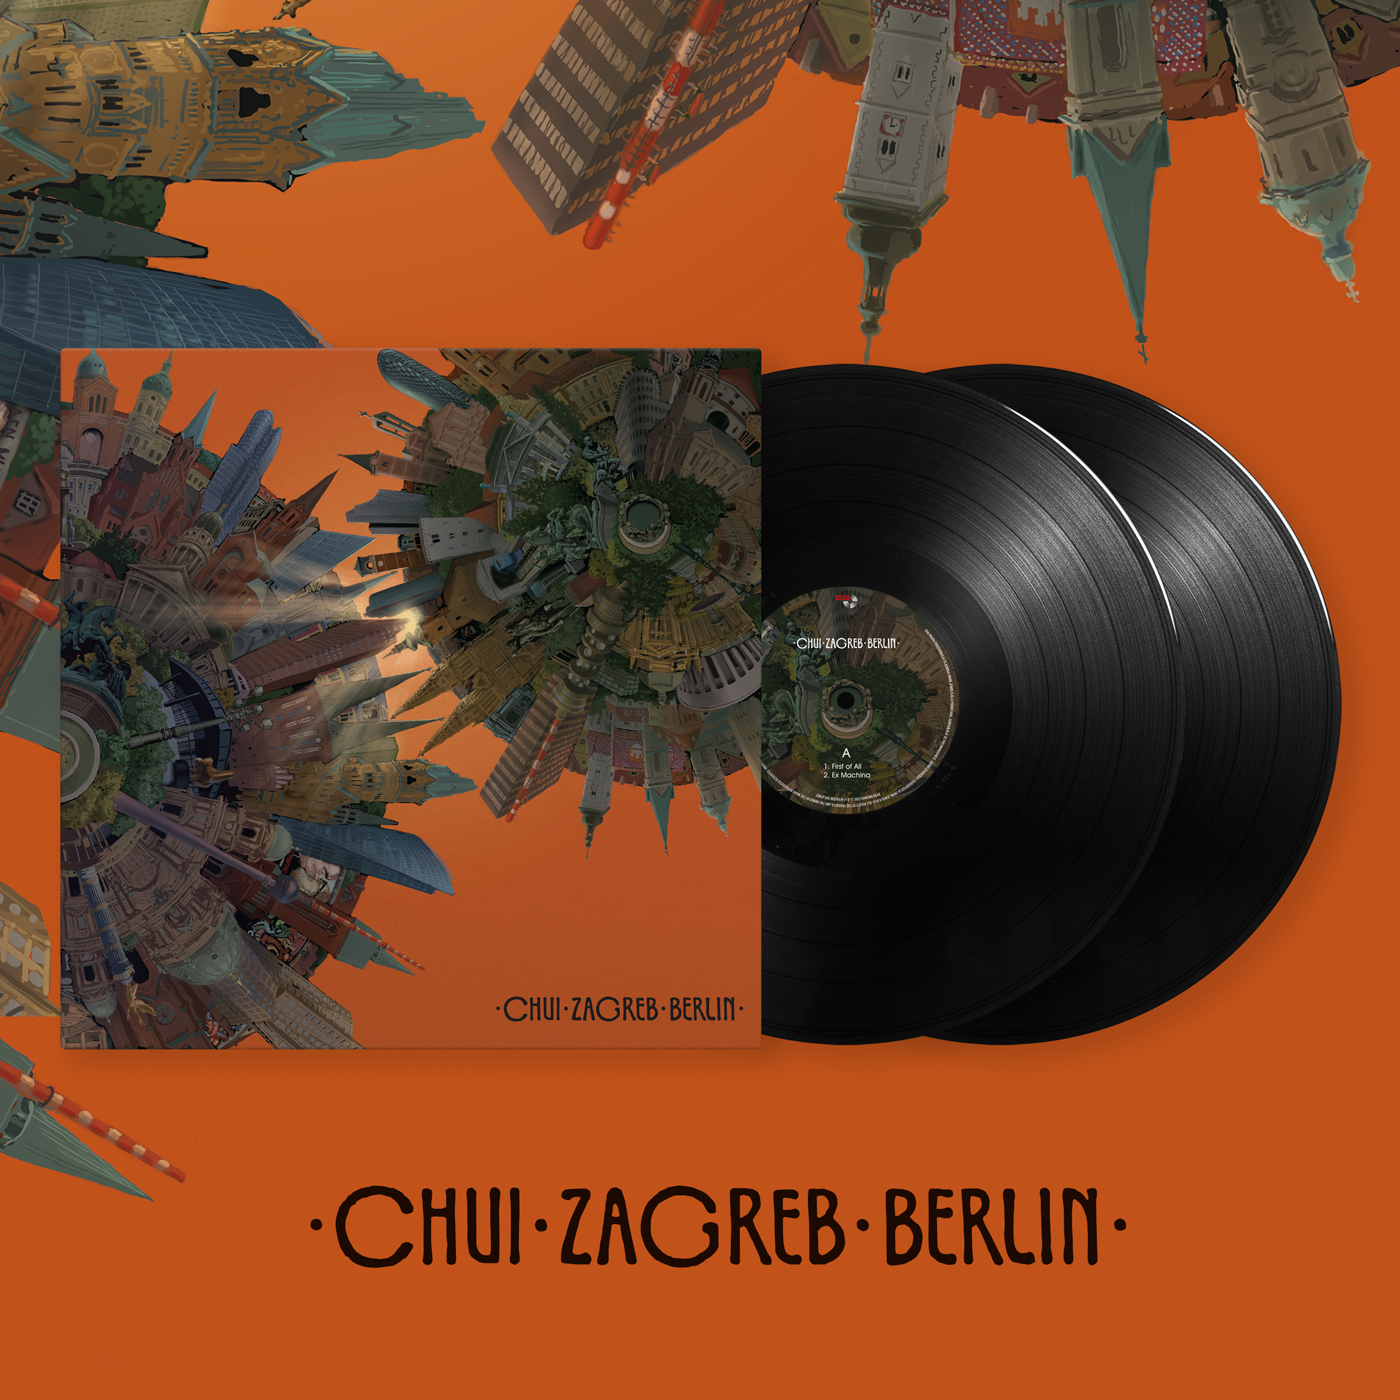 Trenutno pregledavate Chui objavljuju vinilno izdanje “Zagreb-Berlin” na kojem je zablistala veličanstvena naslovnica albuma